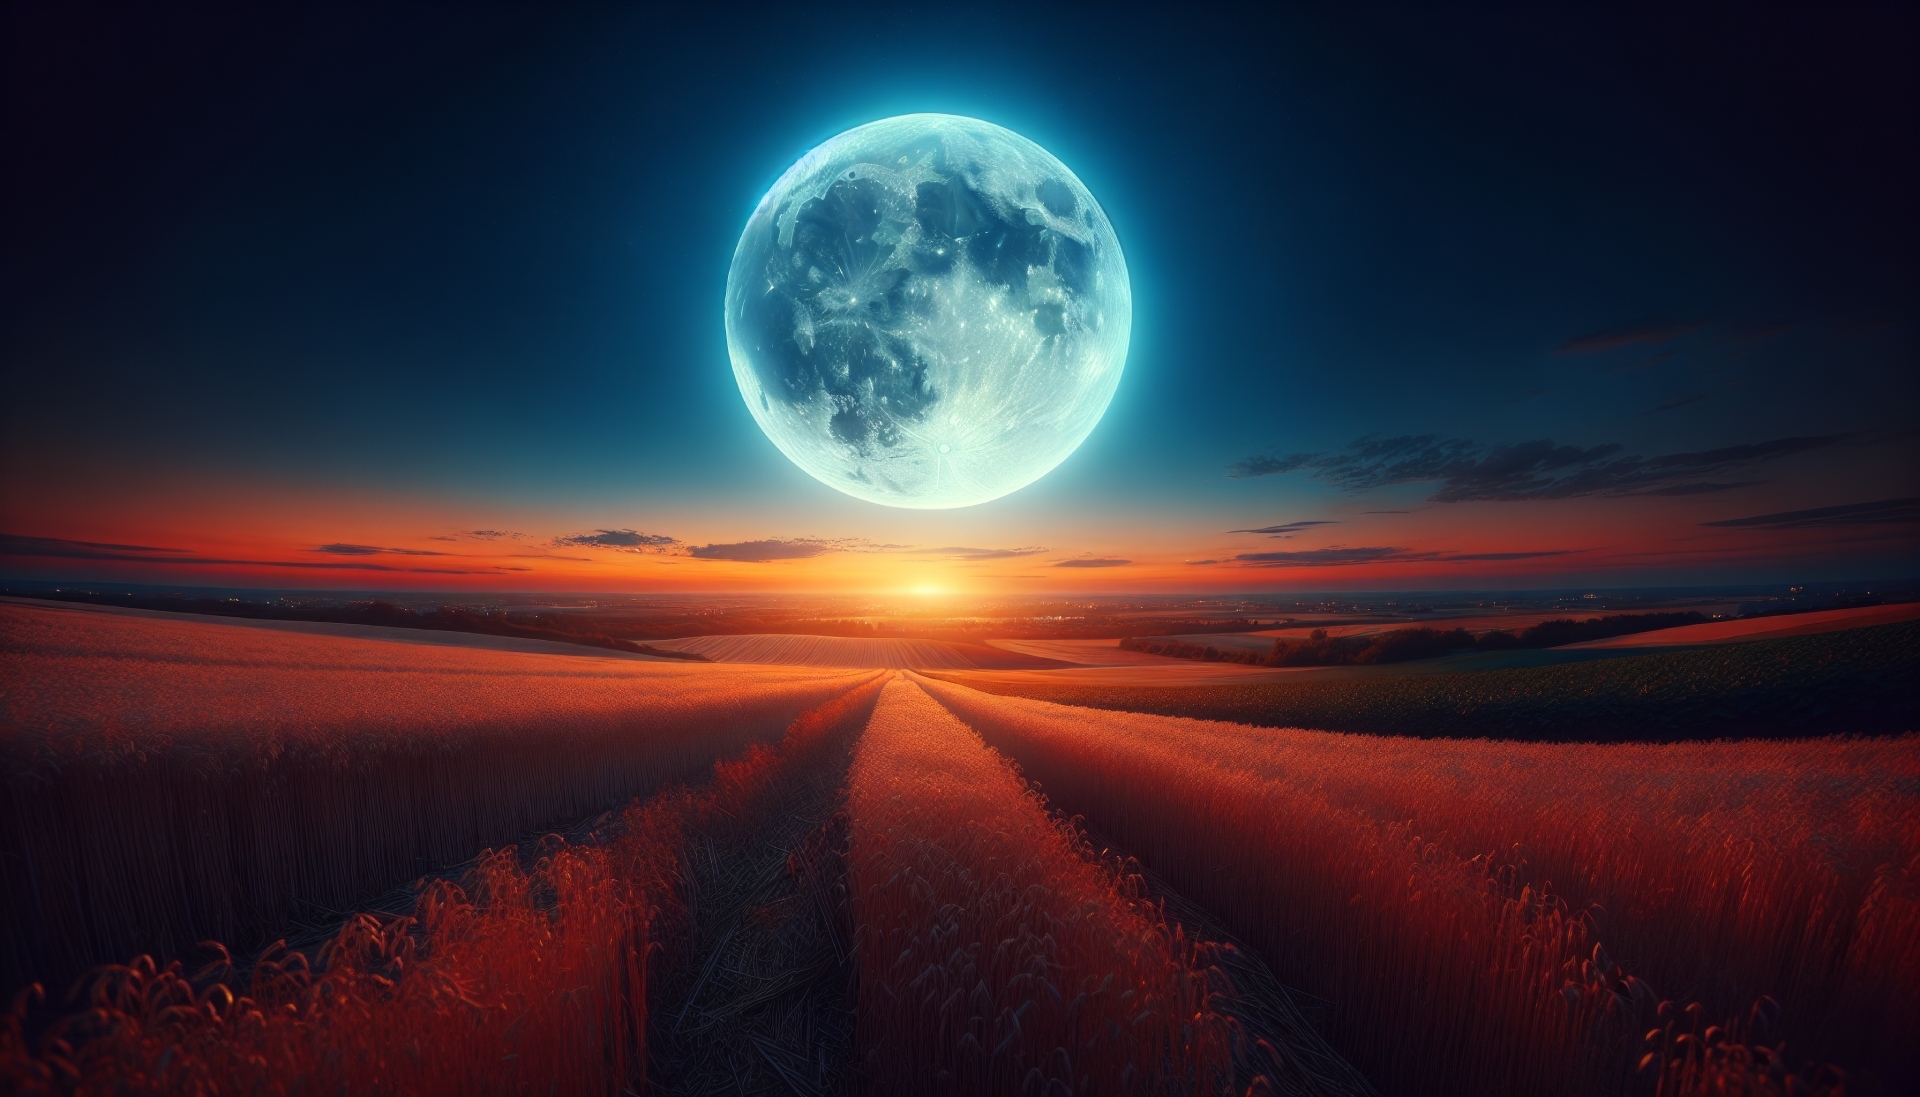 Moon Over Tranquil Fields HD Wallpaper, HD Artist 4K Wallpapers, Images ...